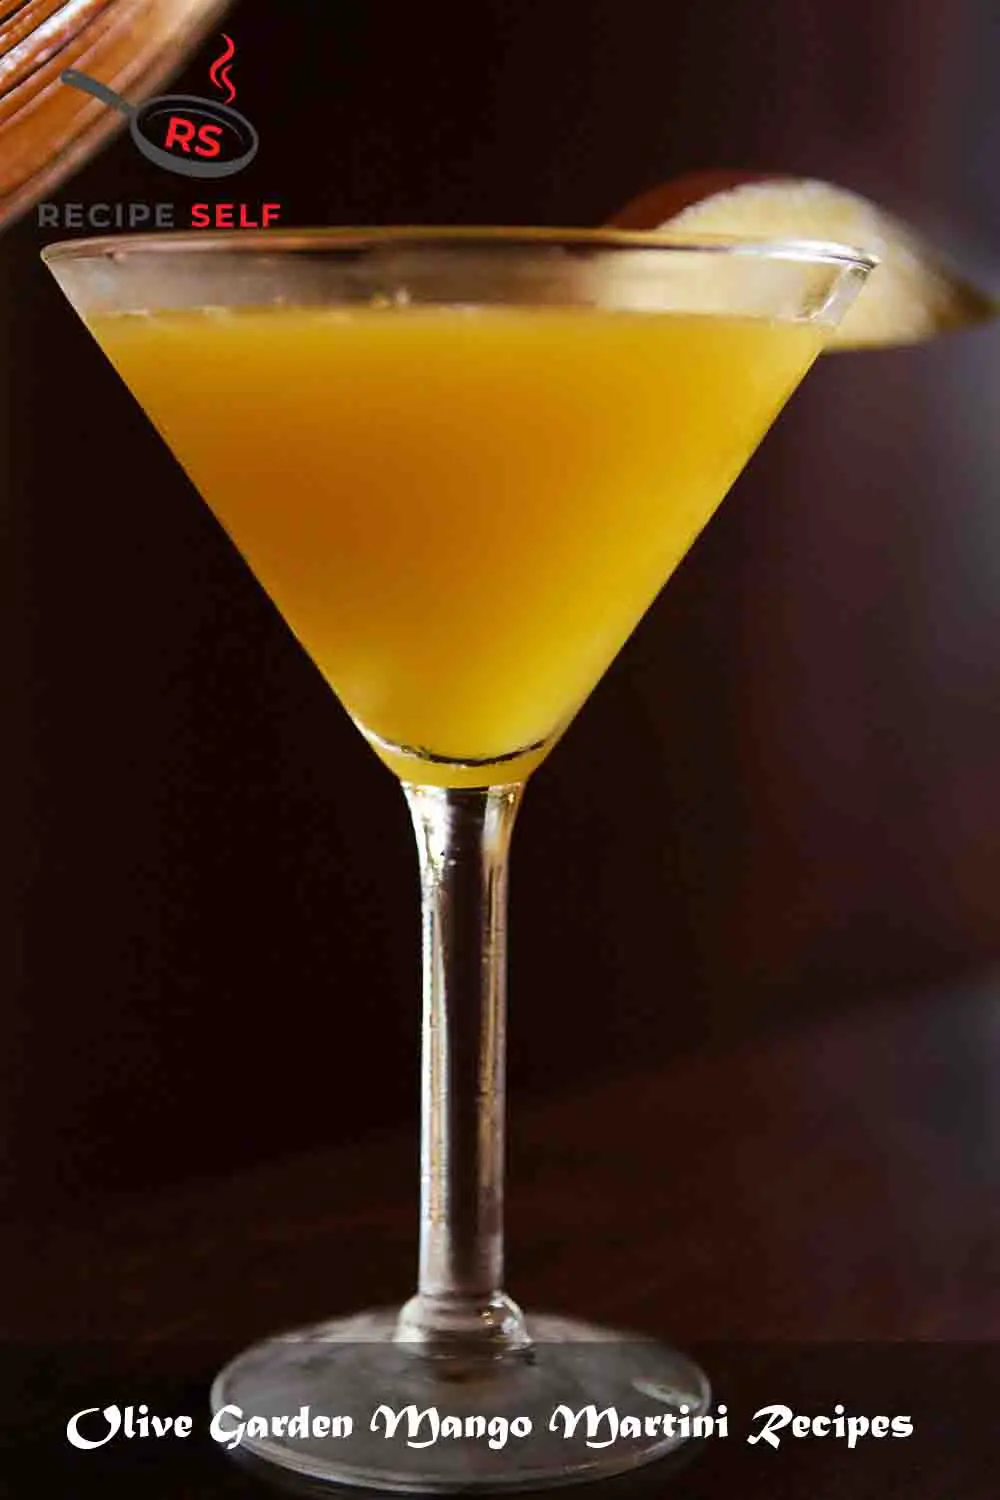 Olive Garden Mango Martini Recipes